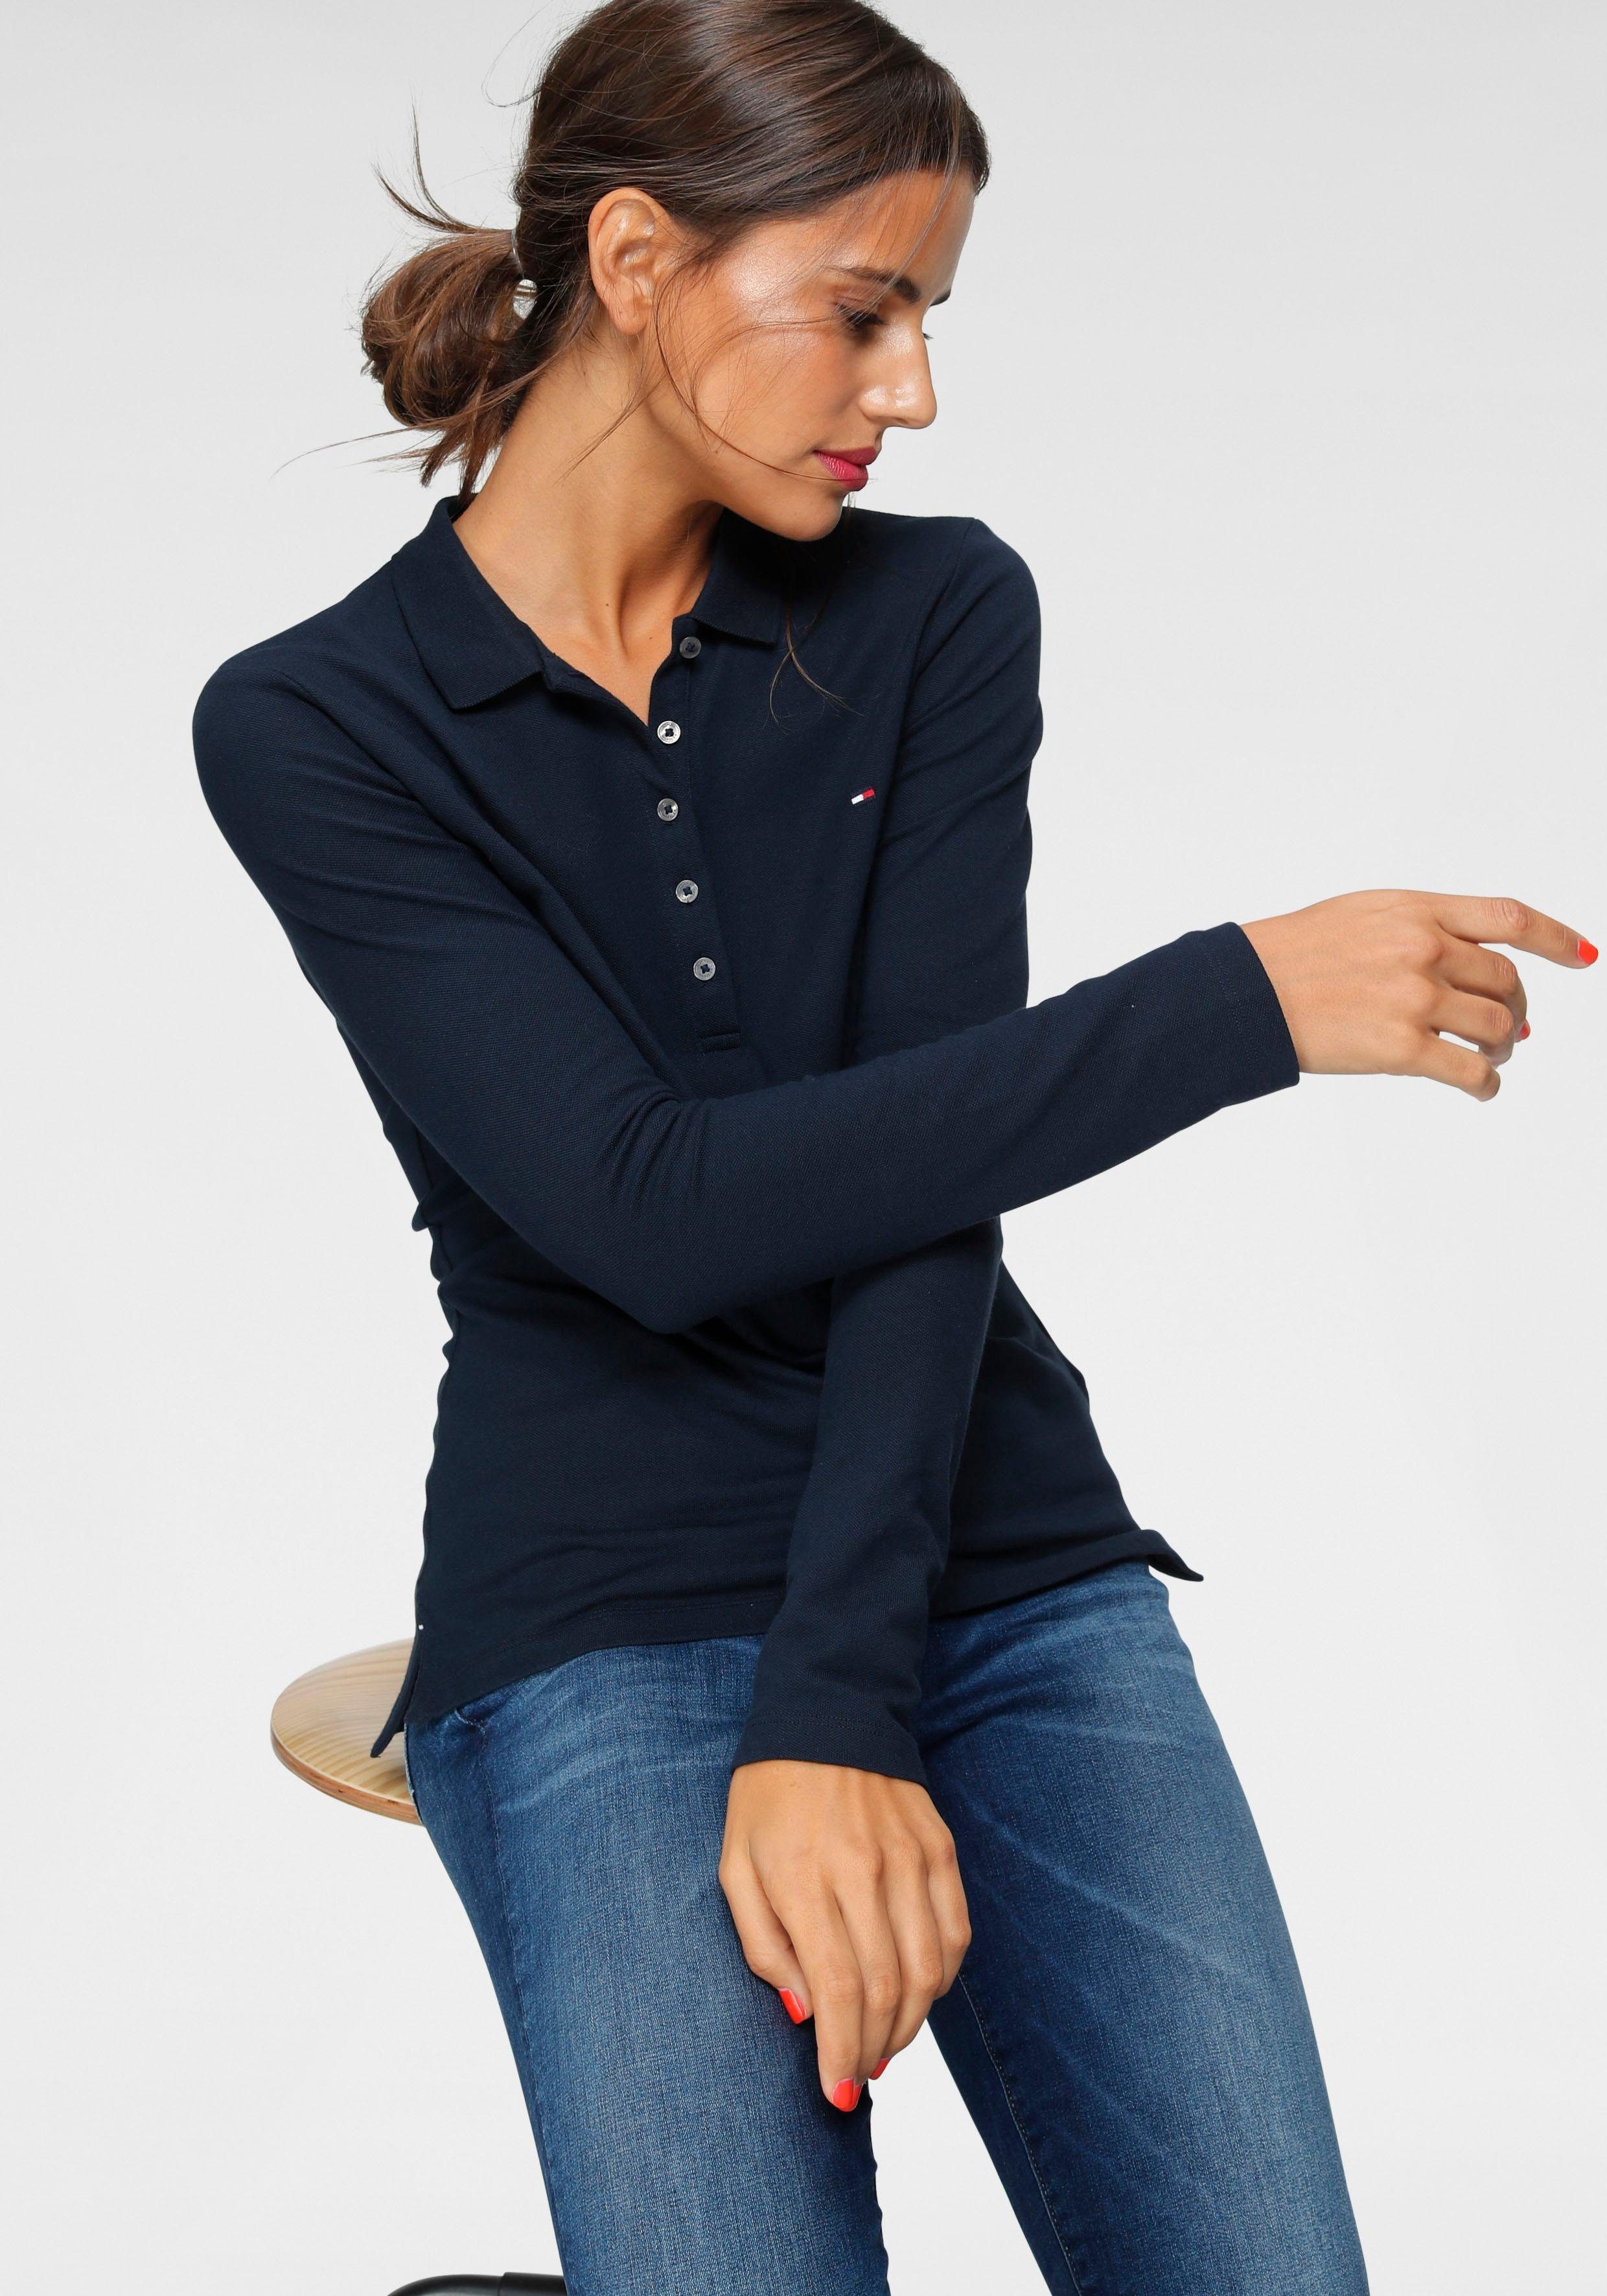 Langarm Damen Poloshirts online kaufen » Polohemden | OTTO